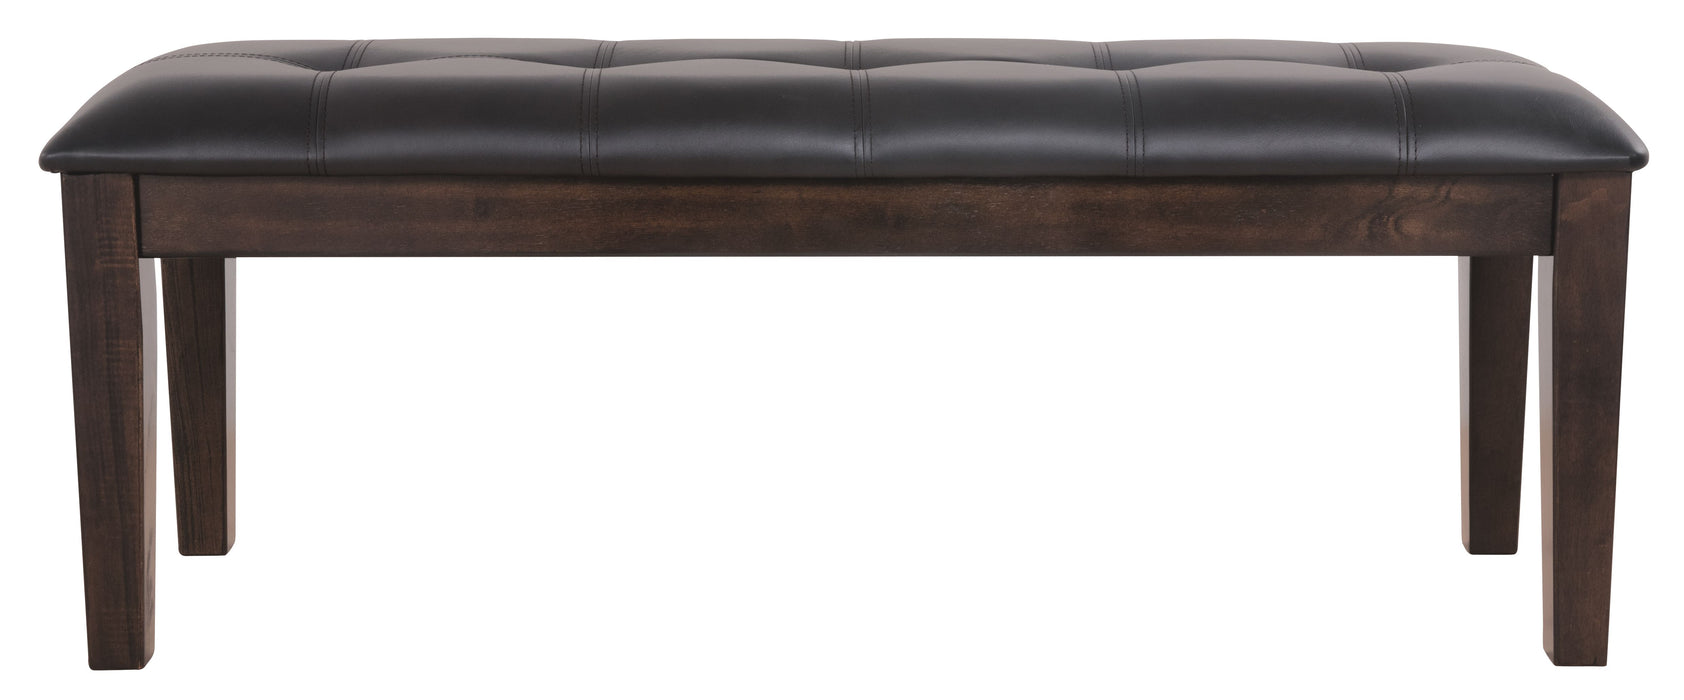 Haddigan - Dark Brown - Large Uph Dining Room Bench Unique Piece Furniture